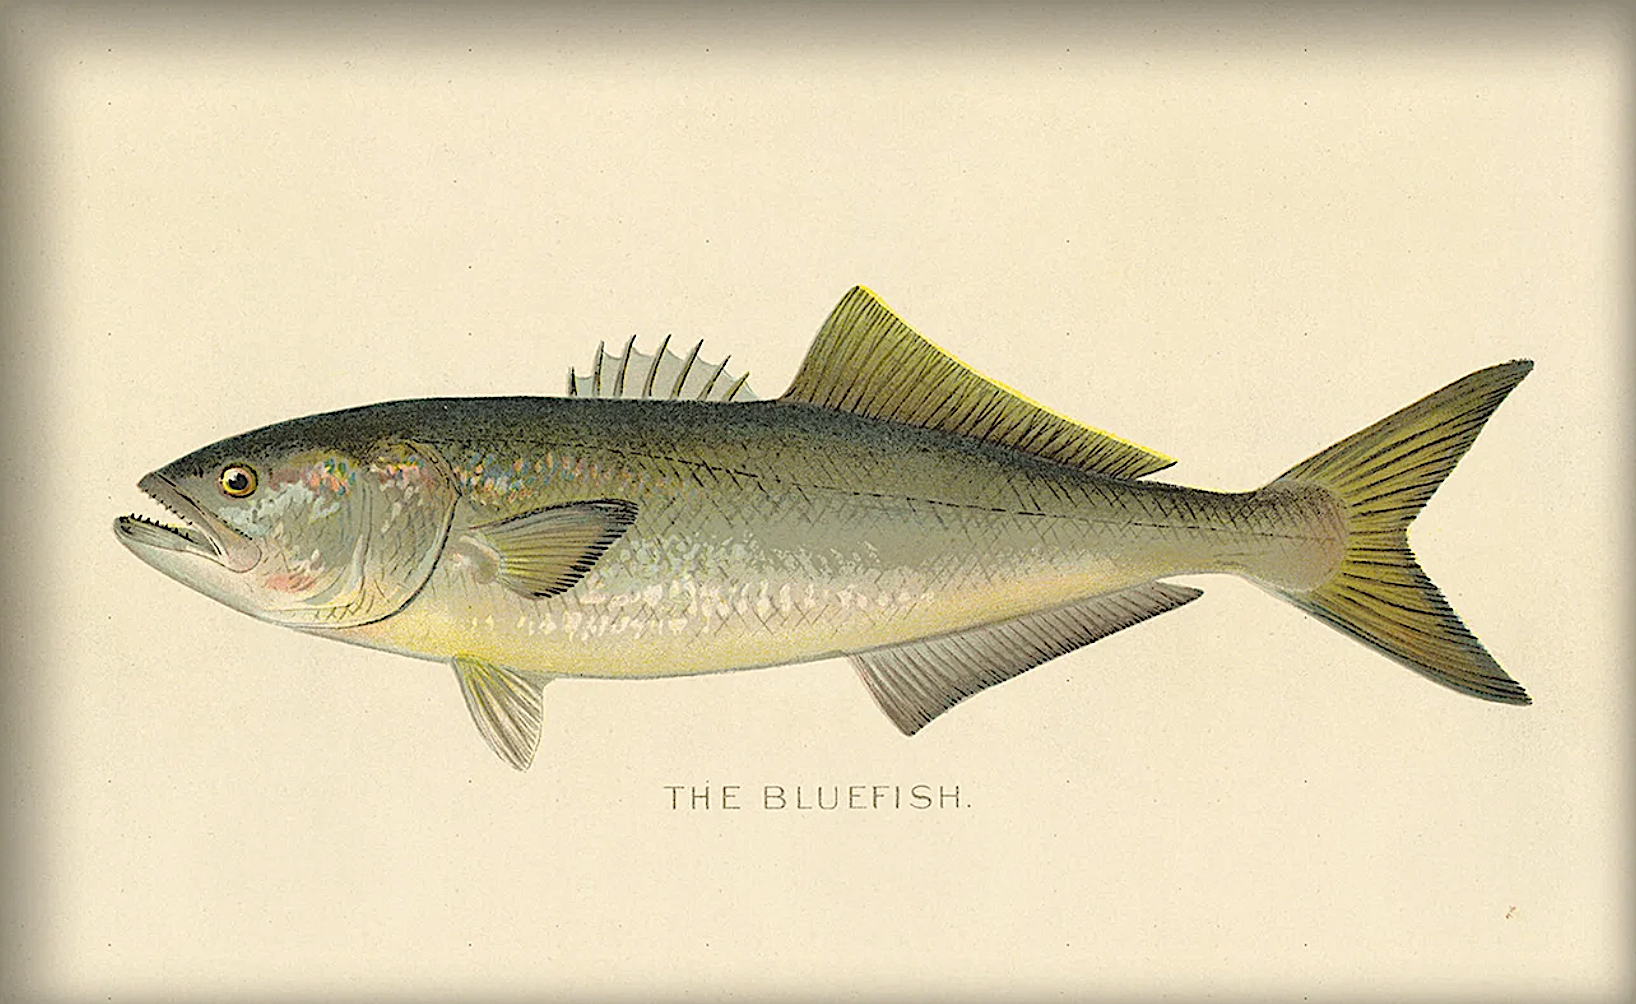 Bluefish illustration.